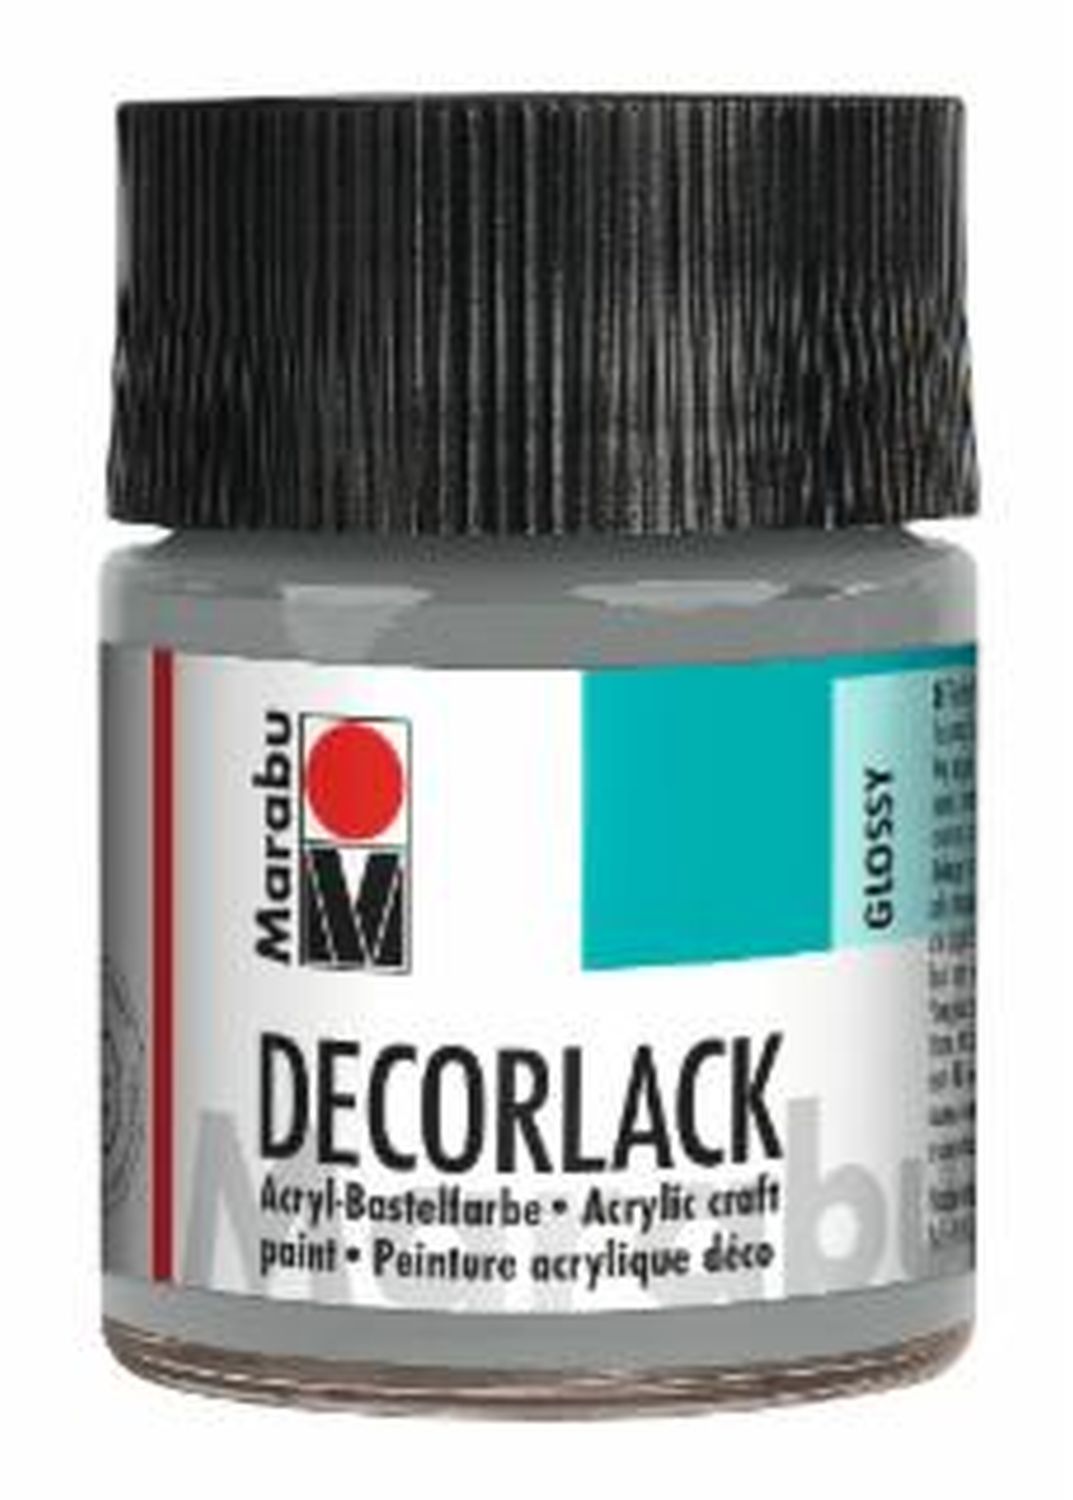 Decorlack Acryl - Metallic-Silber 782, 50 ml